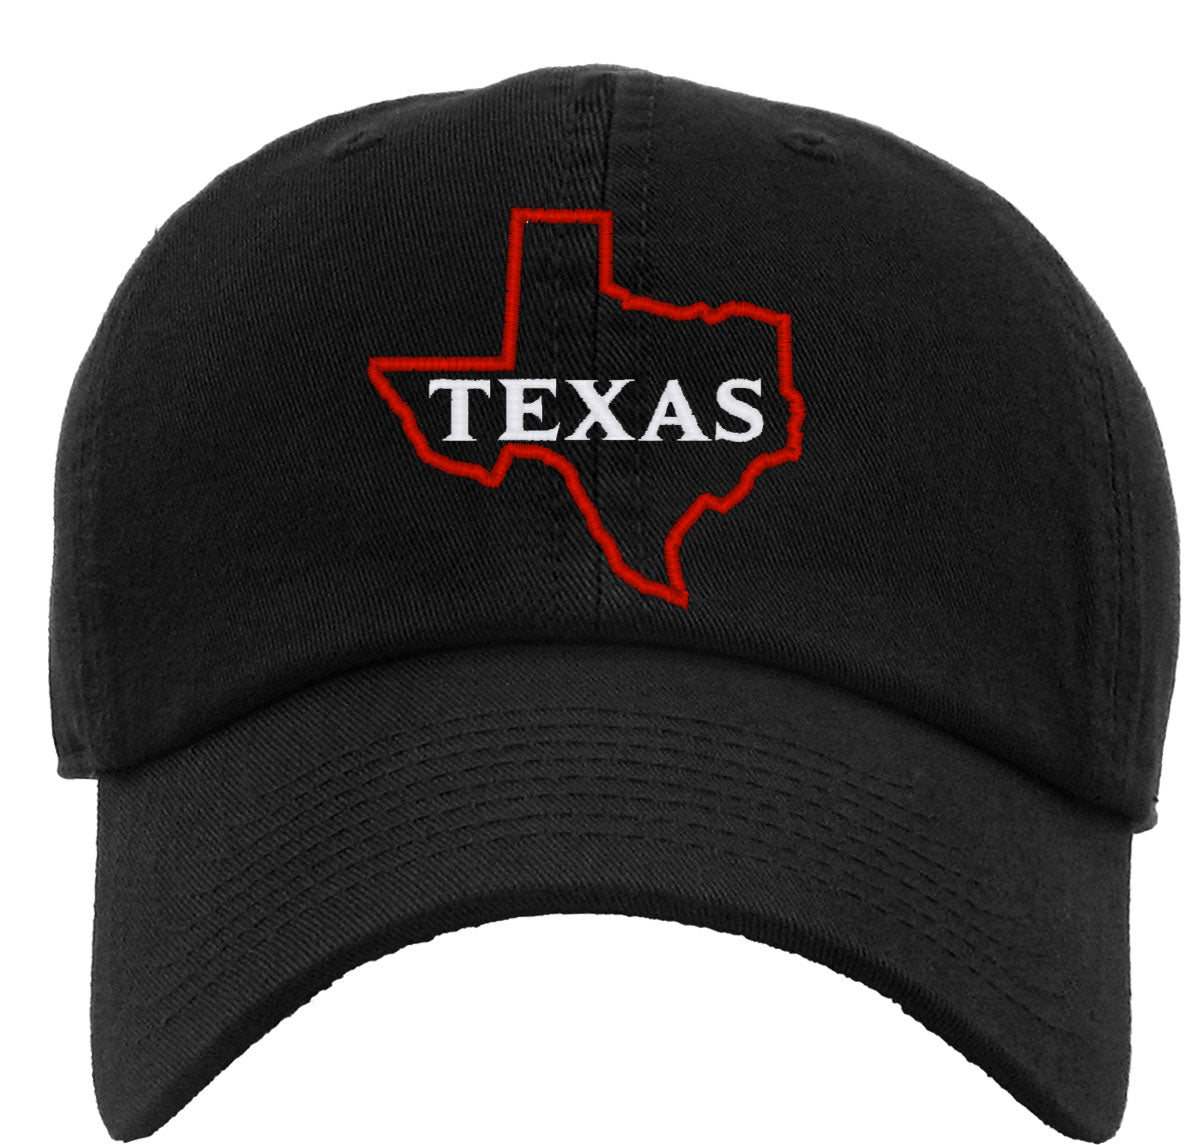 Texas Premium Baseball Cap